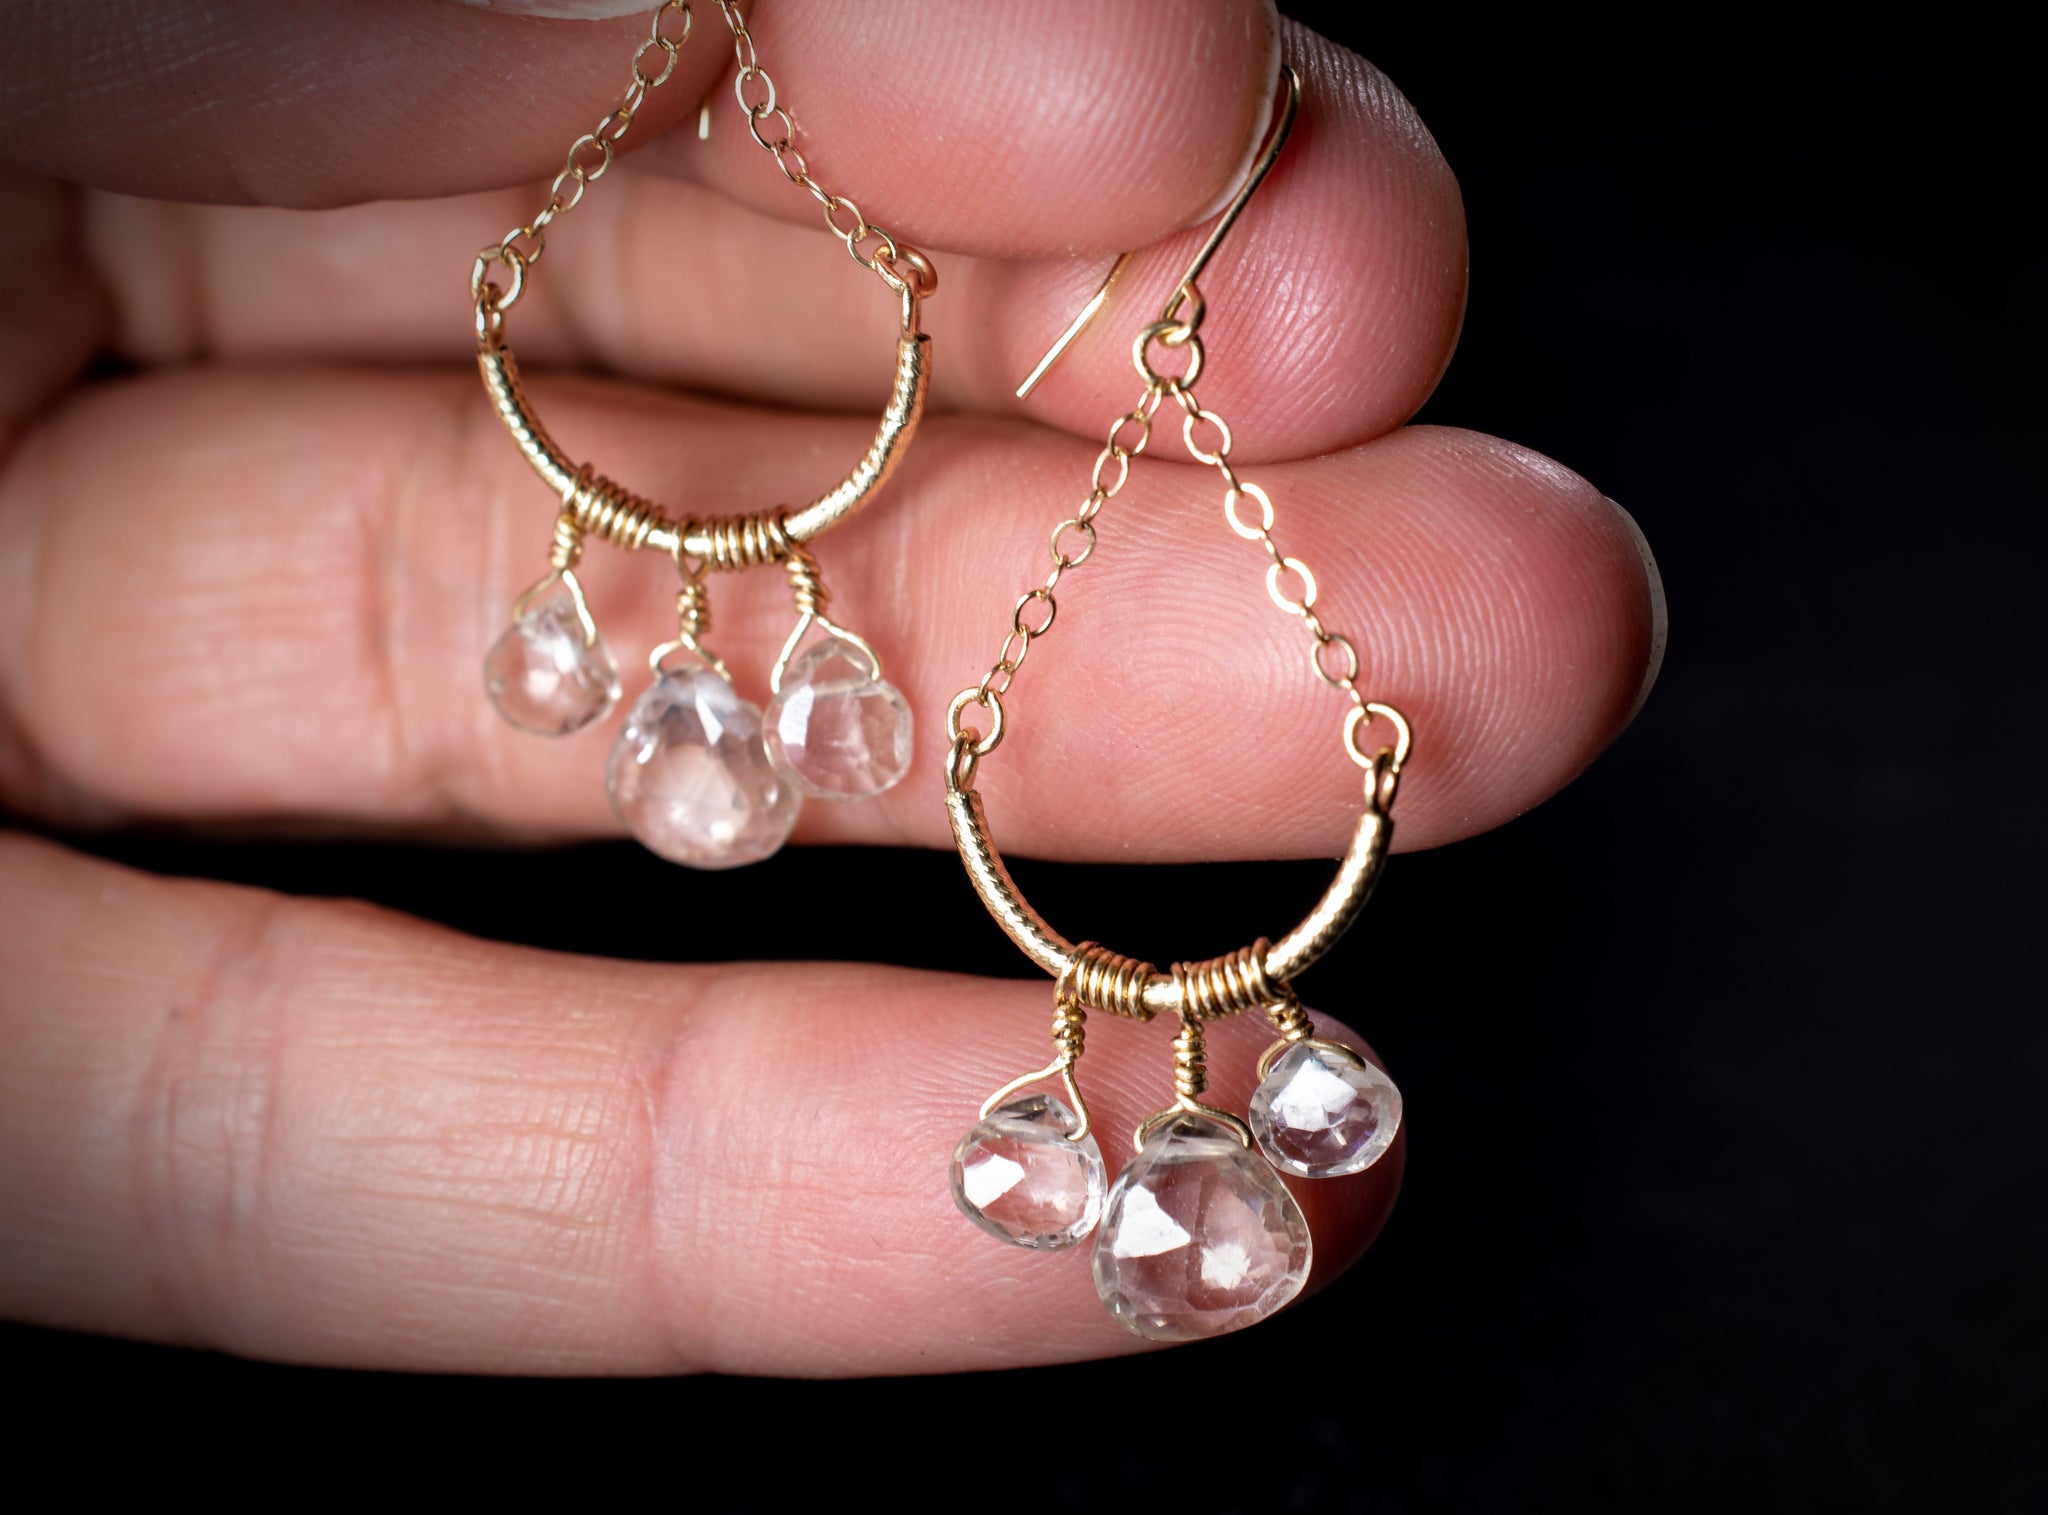 Chandelier Earrings in 14k Gold with Natural Zircon Gemstones, e38